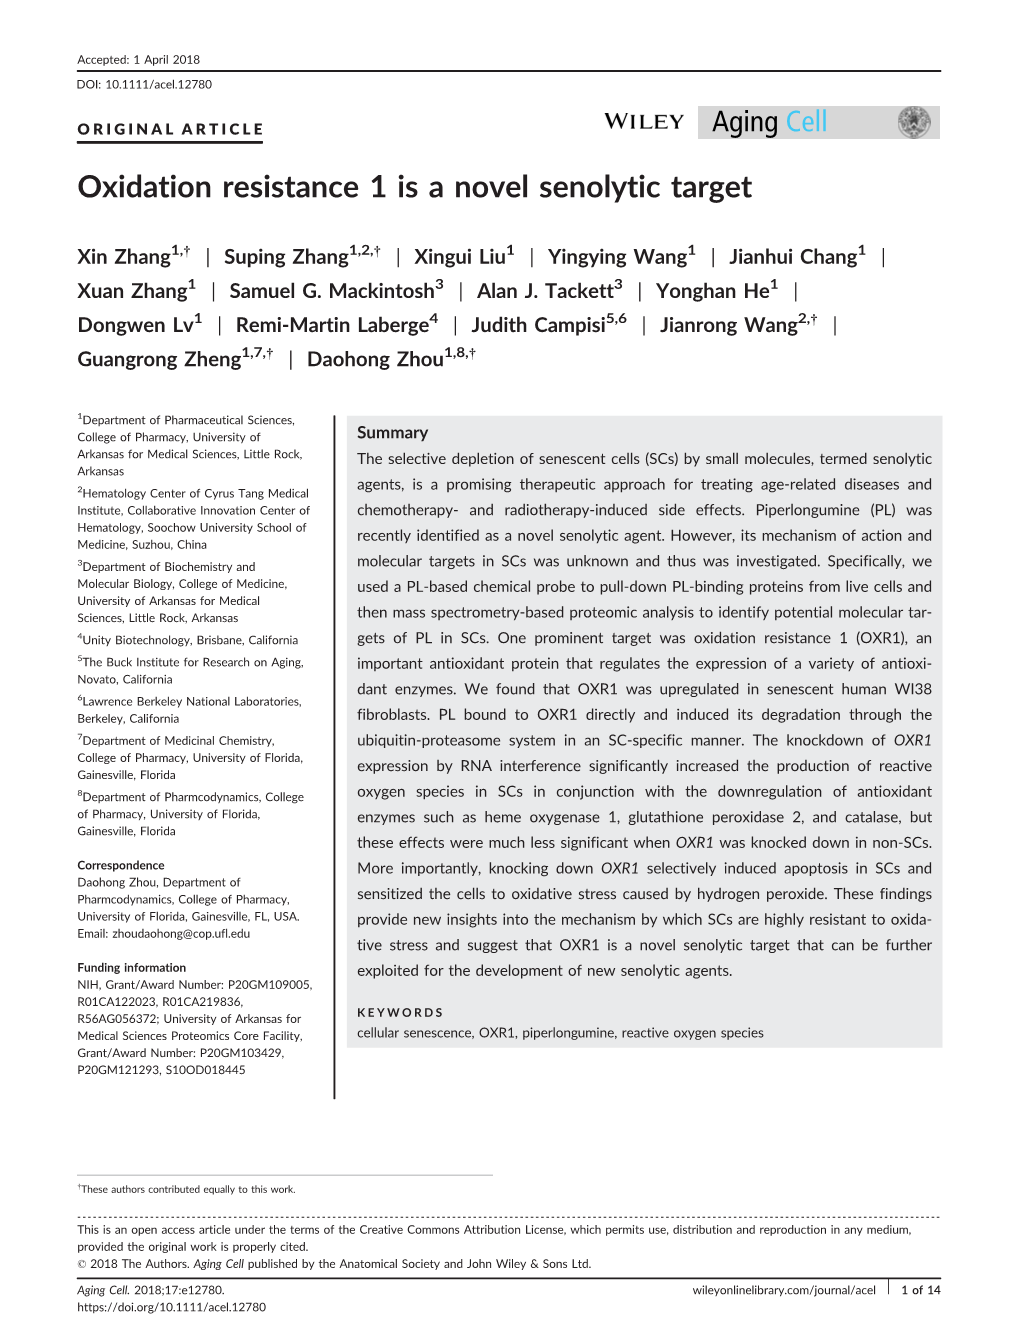 Oxidation Resistance 1 Is a Novel Senolytic Target